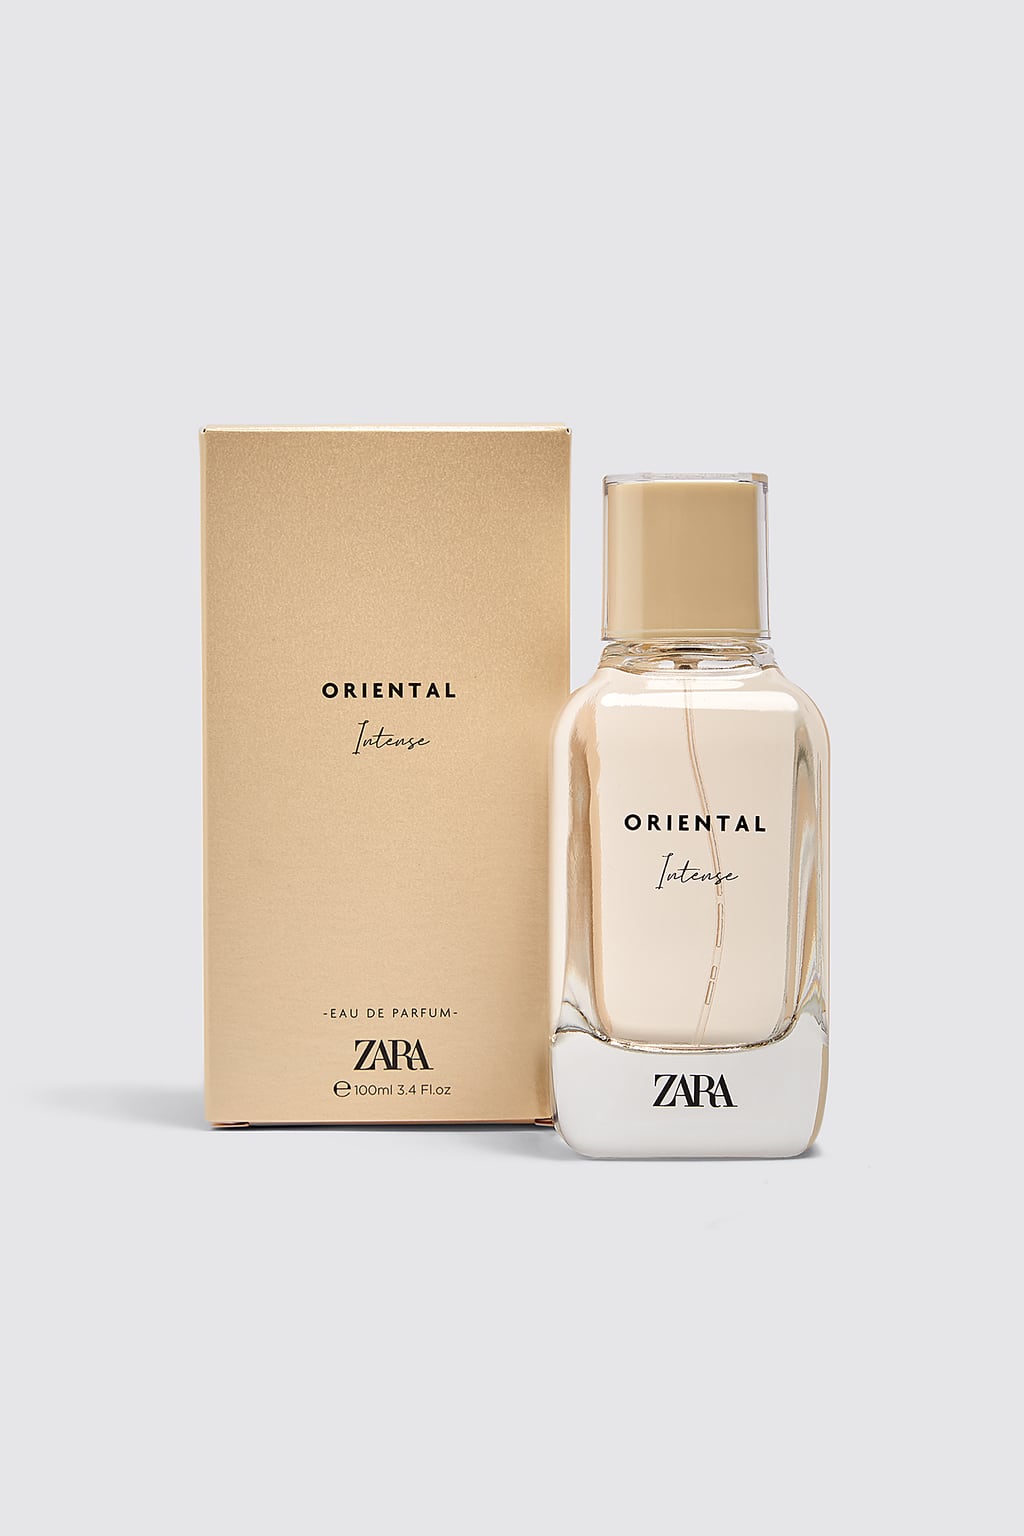 zara oriental perfume online